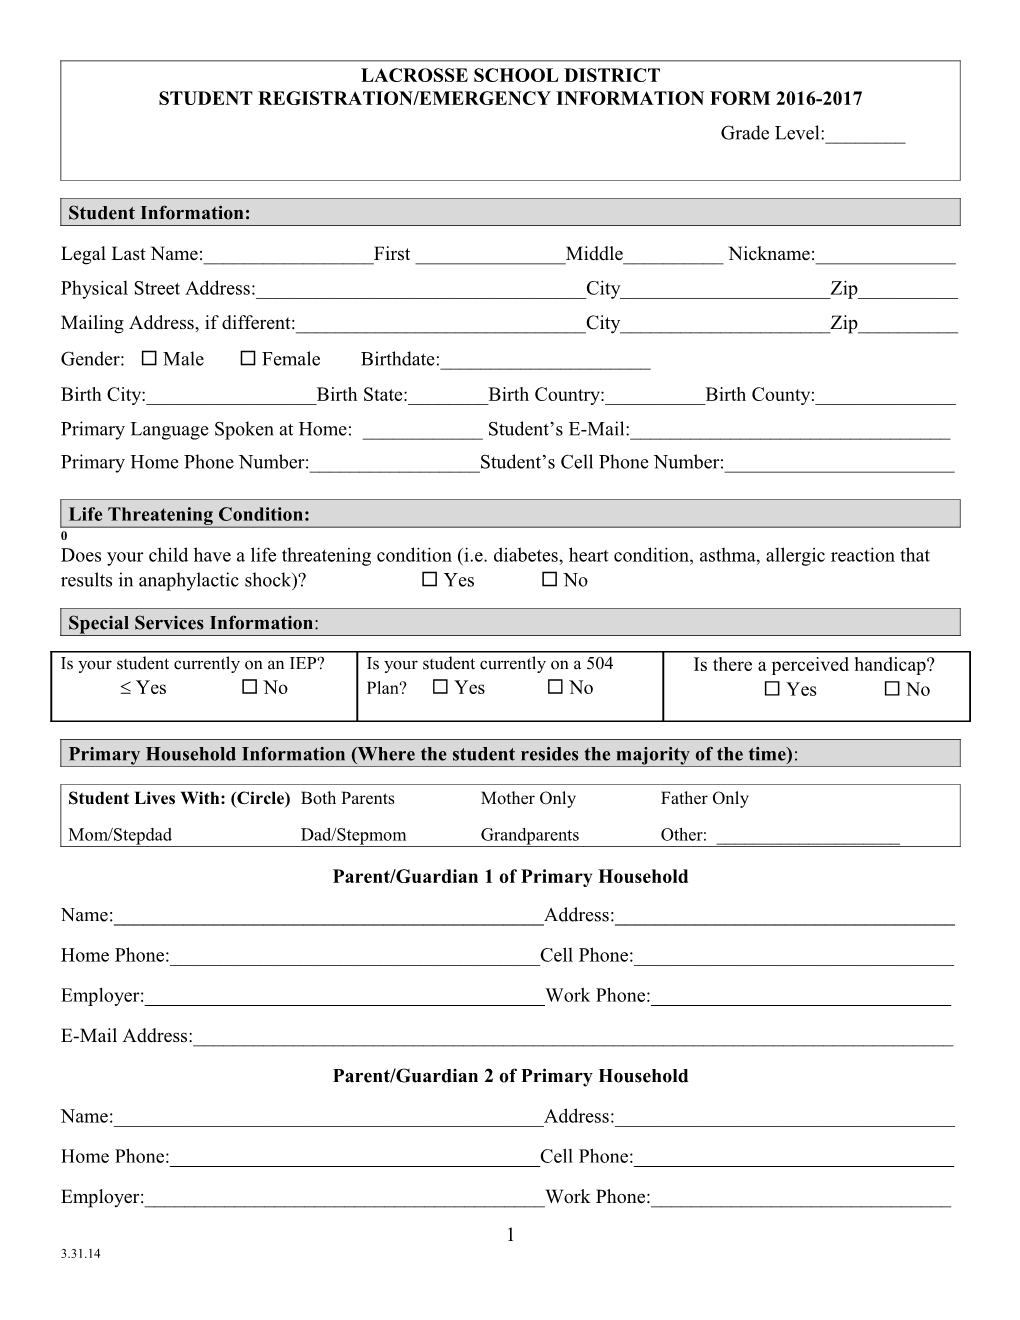 Waitsburg Elementary Student Registration/Emergency Form